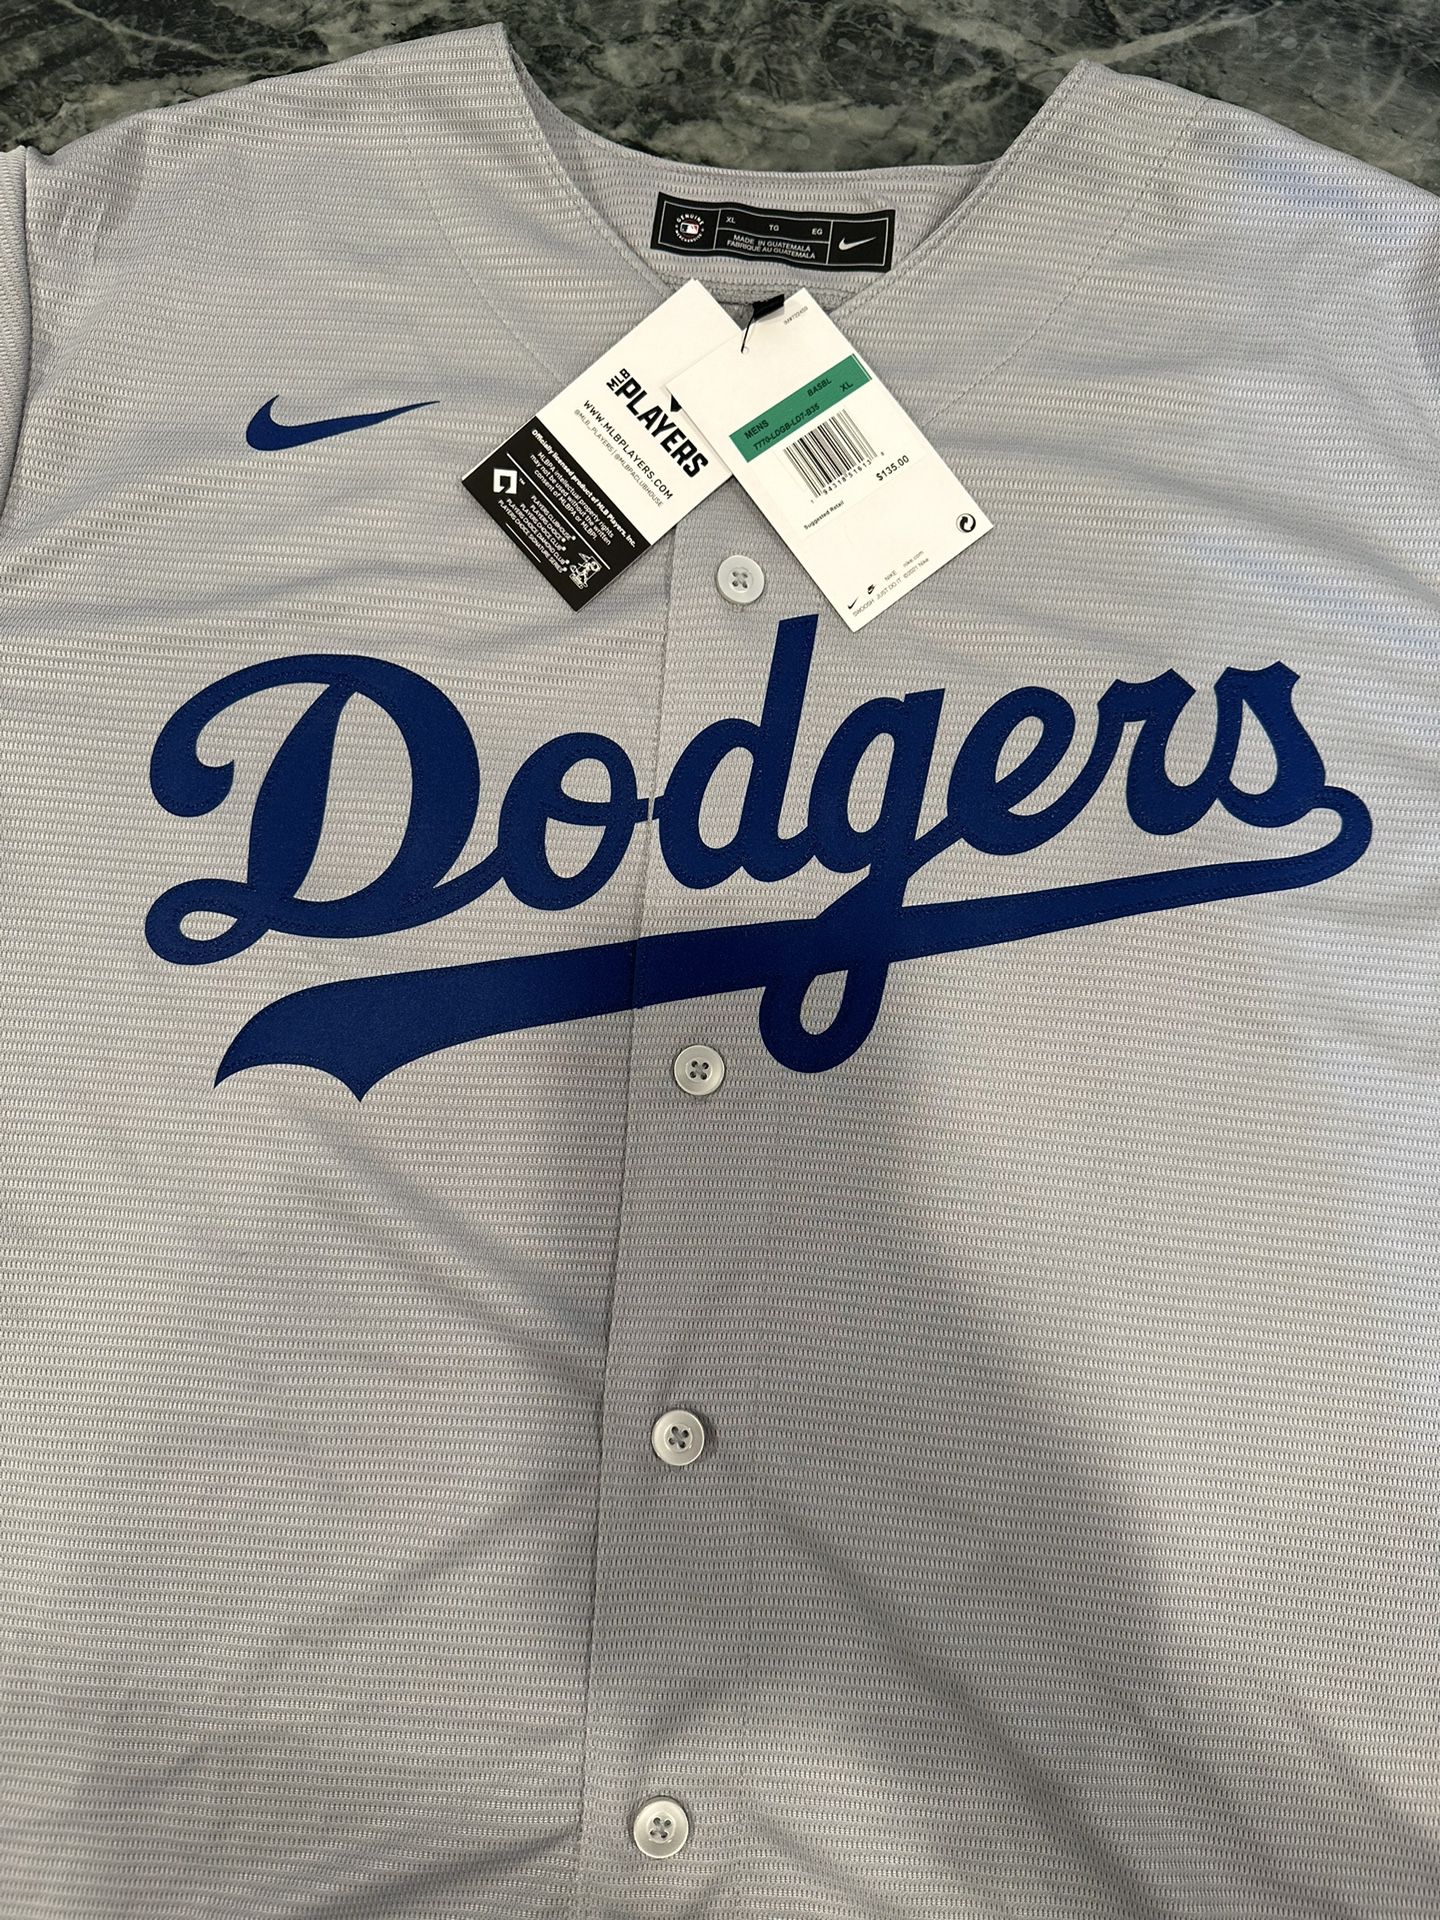 Size XL - Nike Dodgers CODY BELLINGER #35 Light Grey Blue Jersey  Lightweight NWT for Sale in Garden Grove, CA - OfferUp